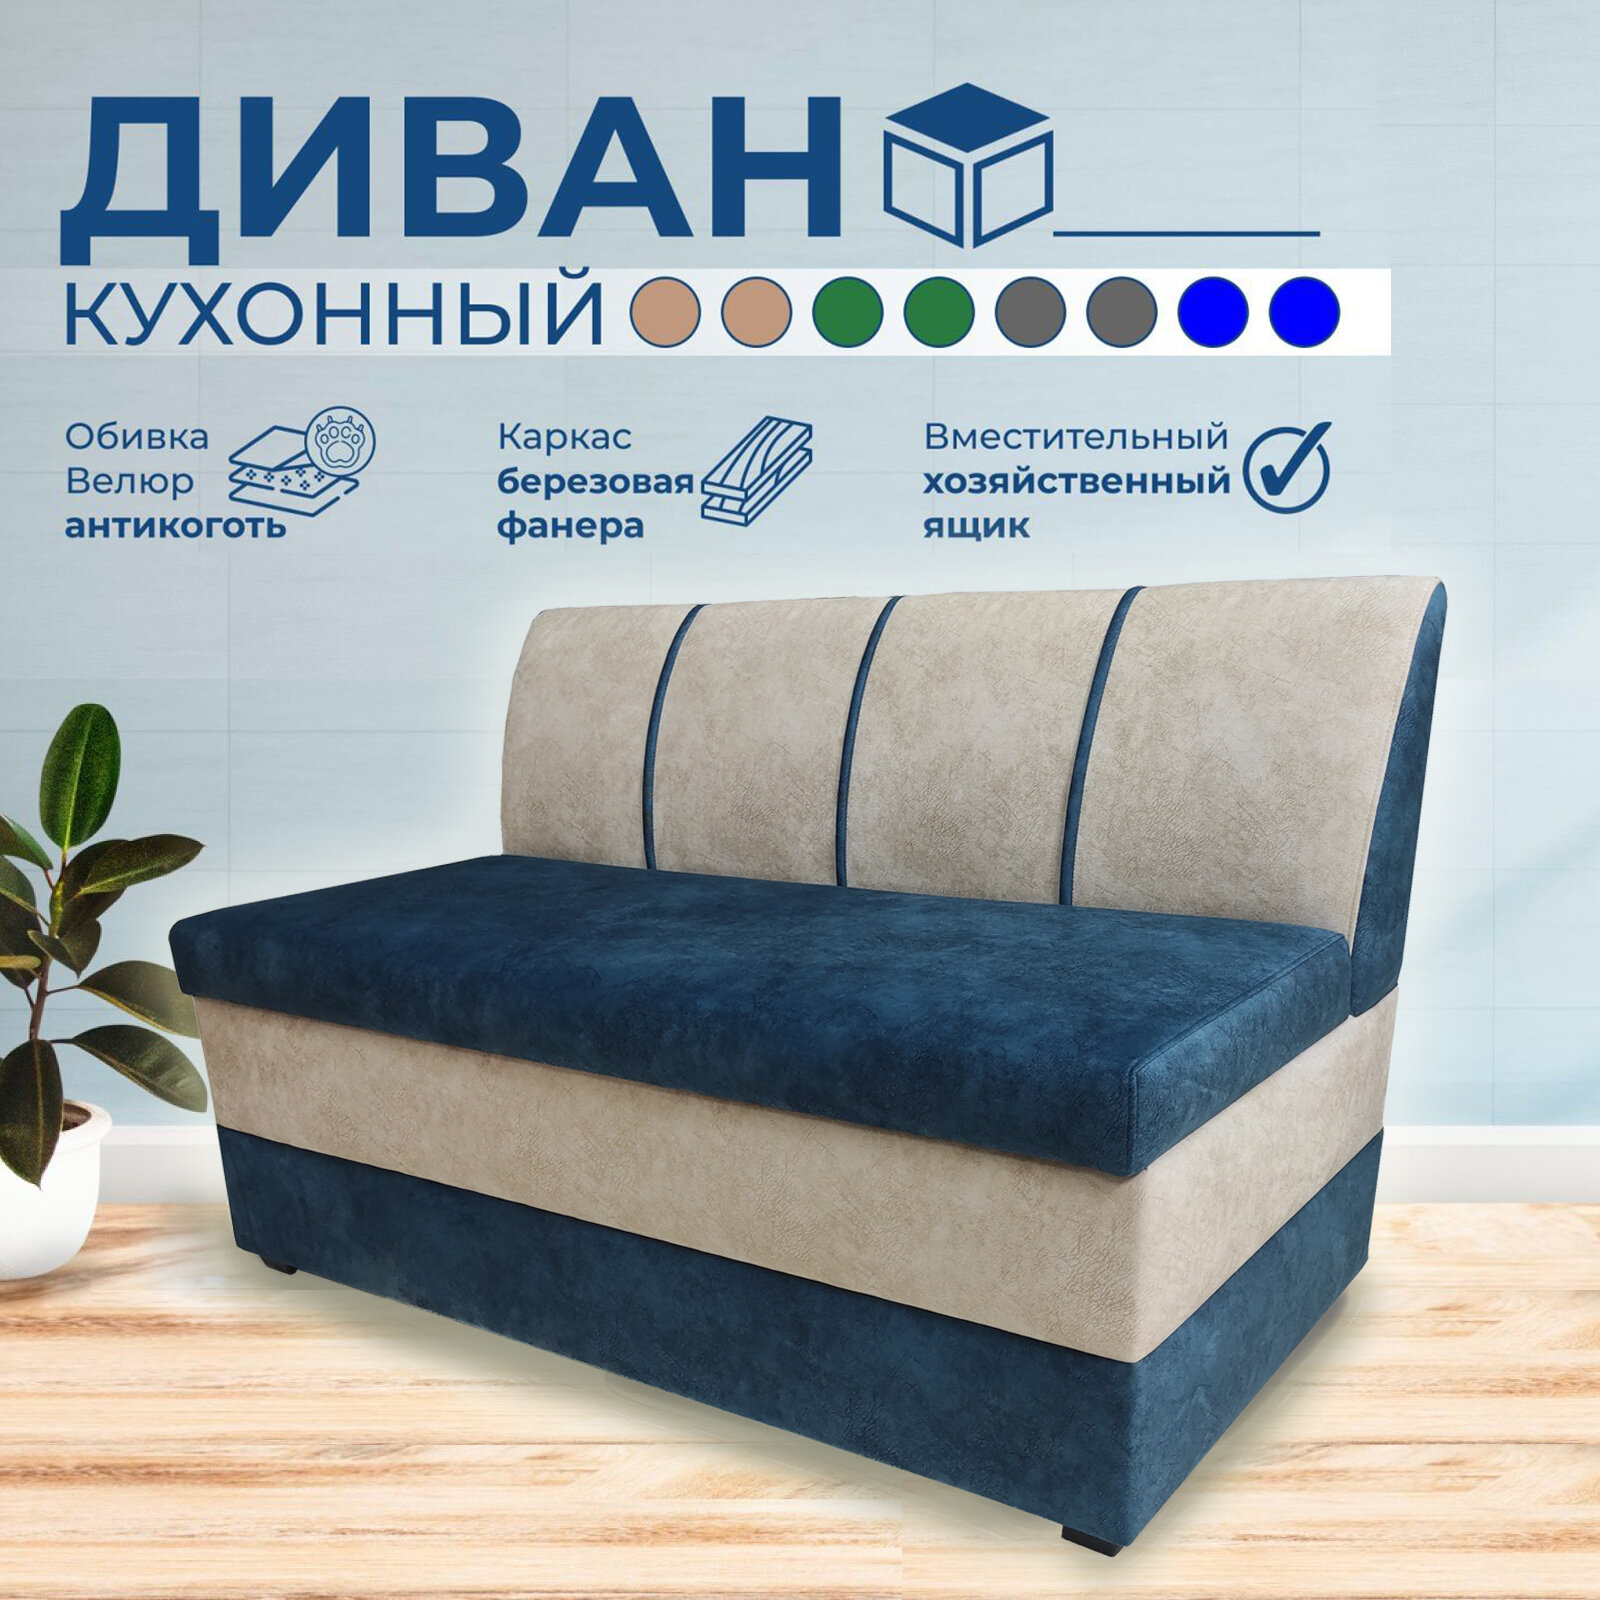 Кухонный диван Форум-8 (160см) Синий - фотография № 1